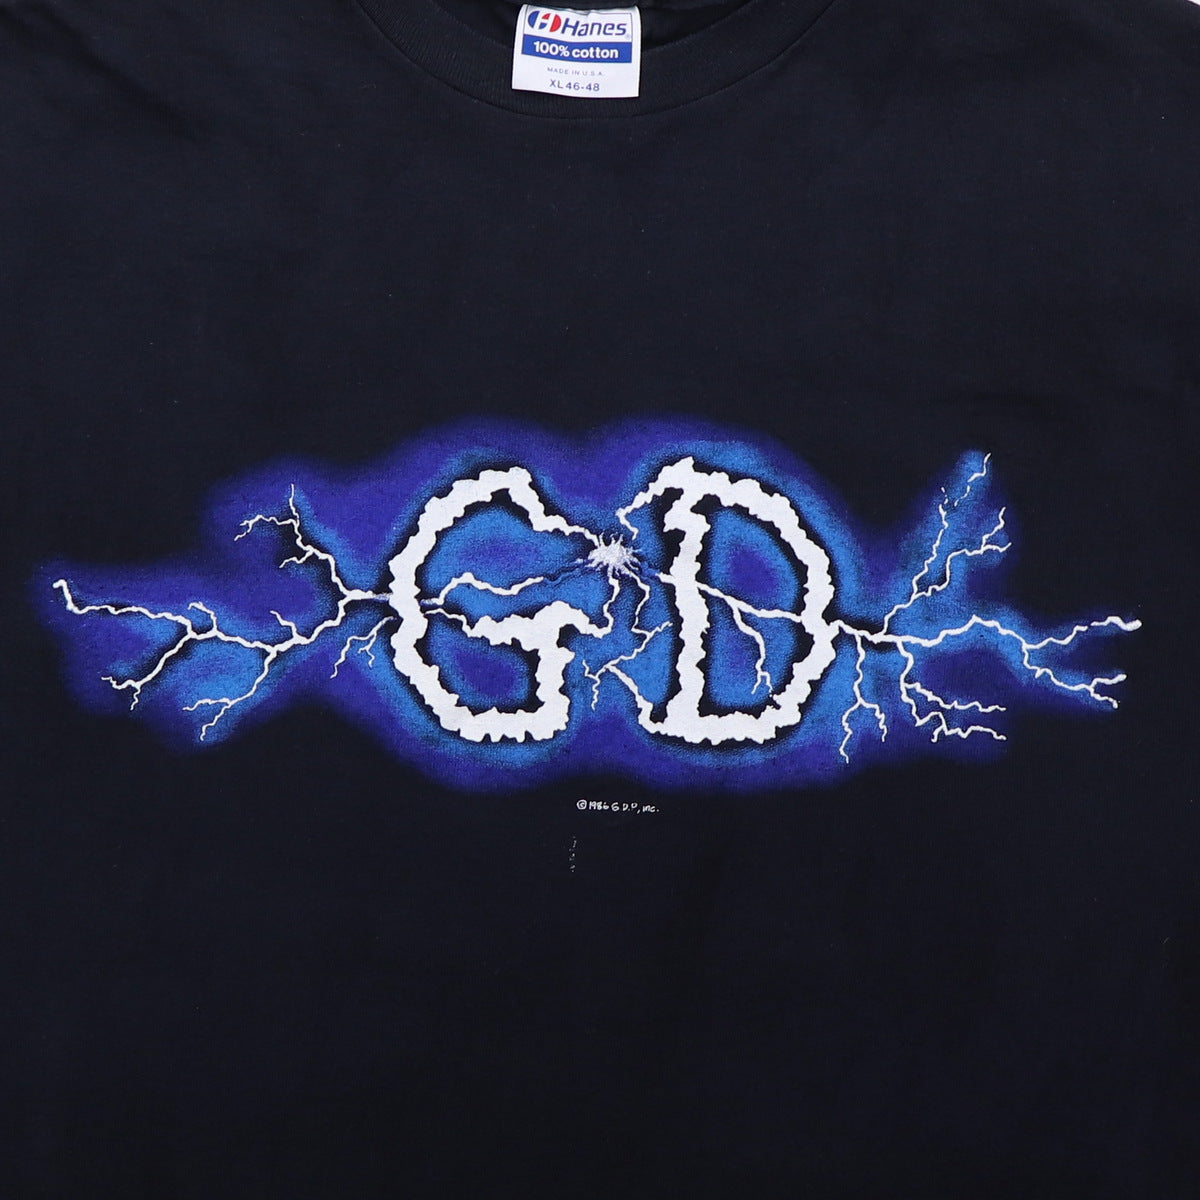 1986 Grateful Dead Ride The Lightning Oakland Coliseum Concert Shirt